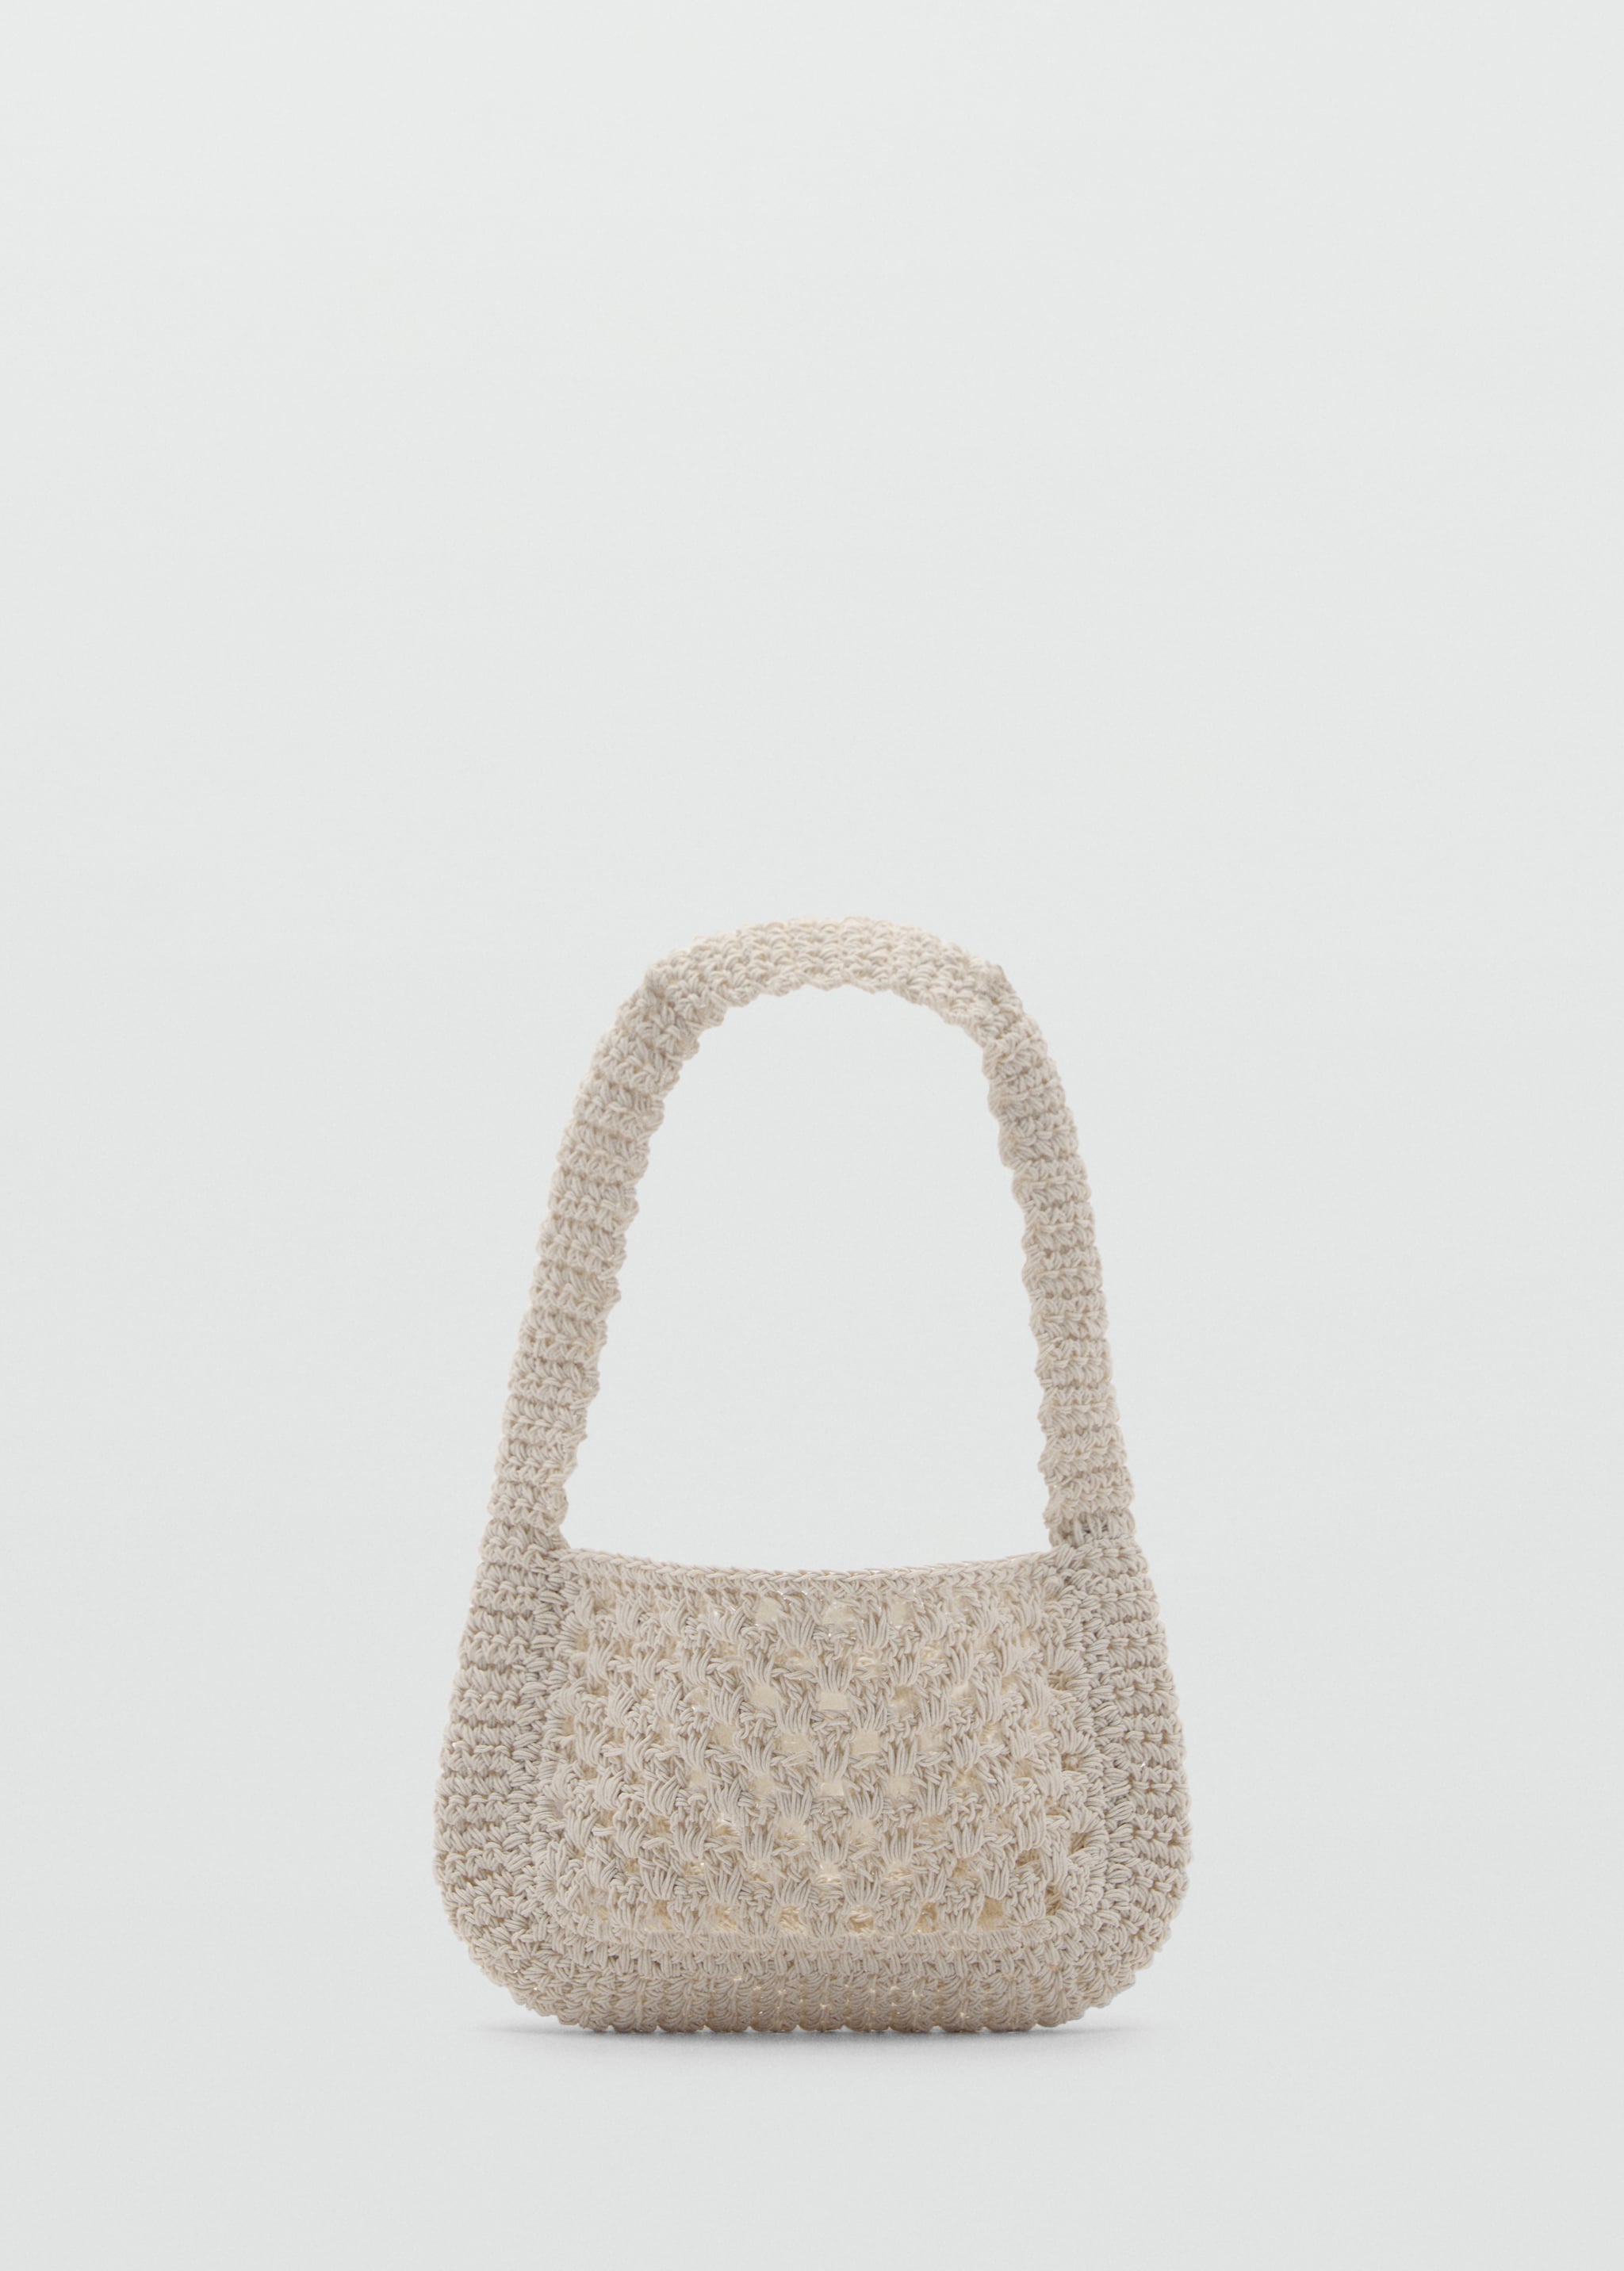 Crochet handbag - Article without model